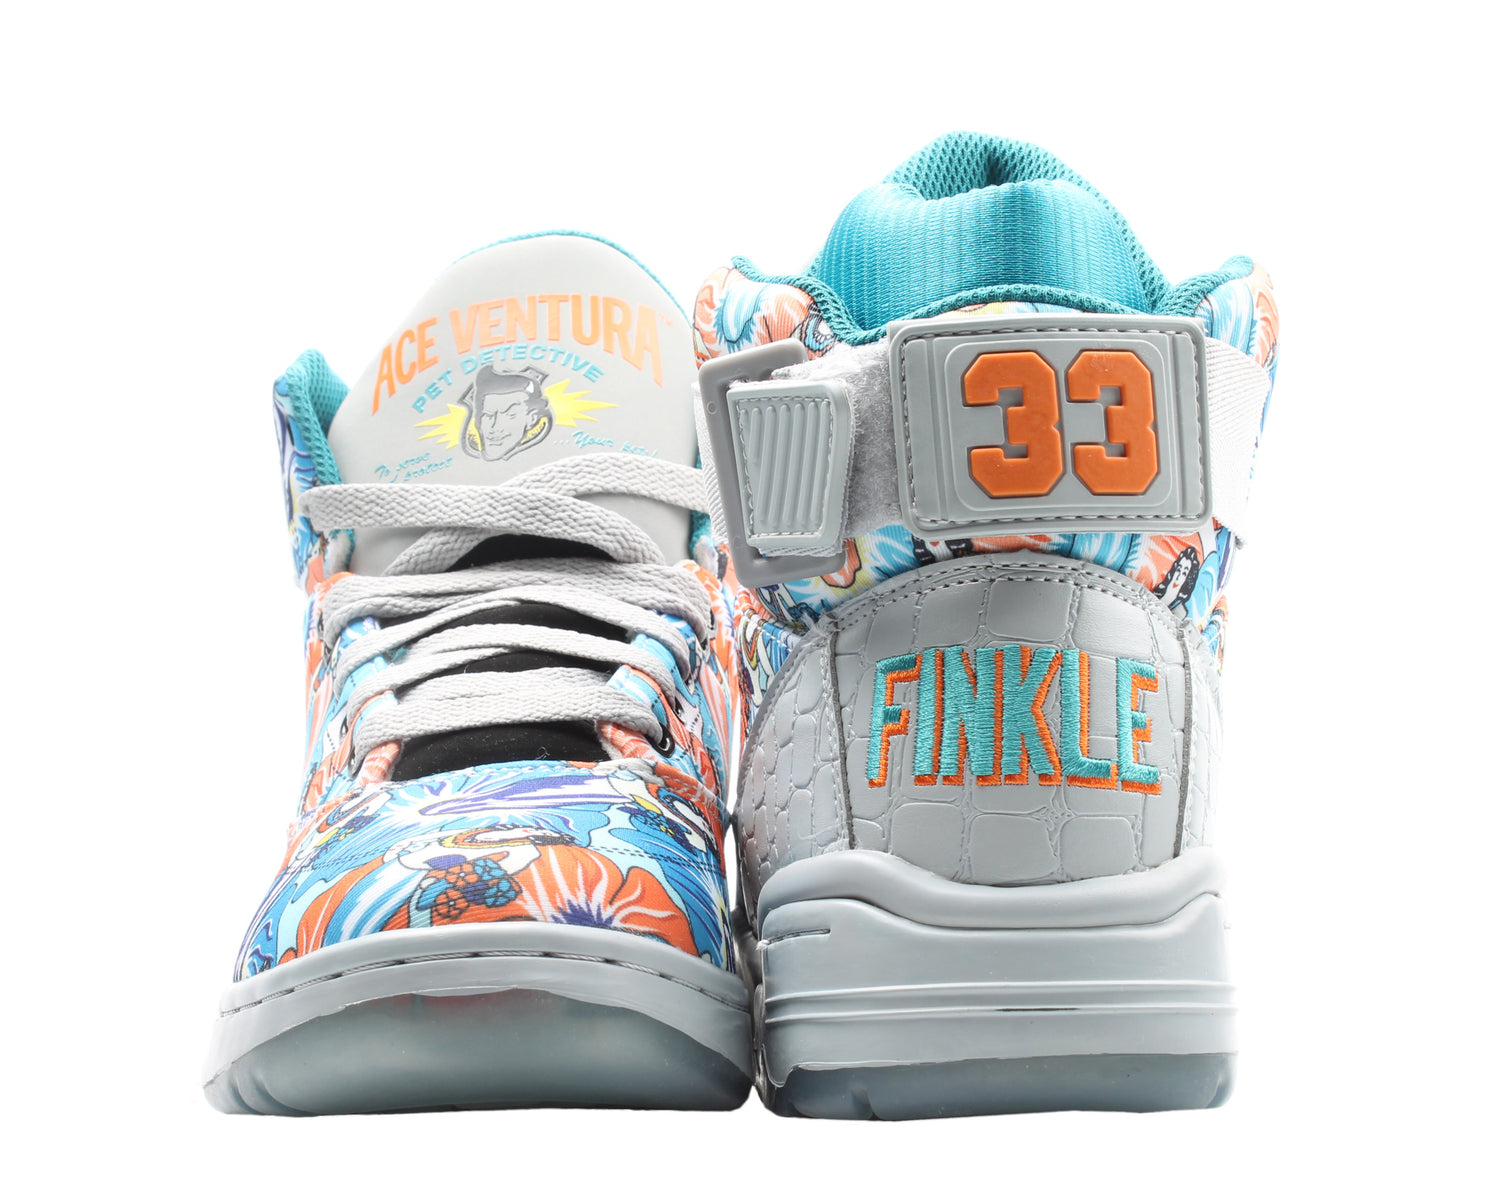 Ewing Athletics Ewing 33 Hi Ace Ventura x Mache Men's Basketball Shoes